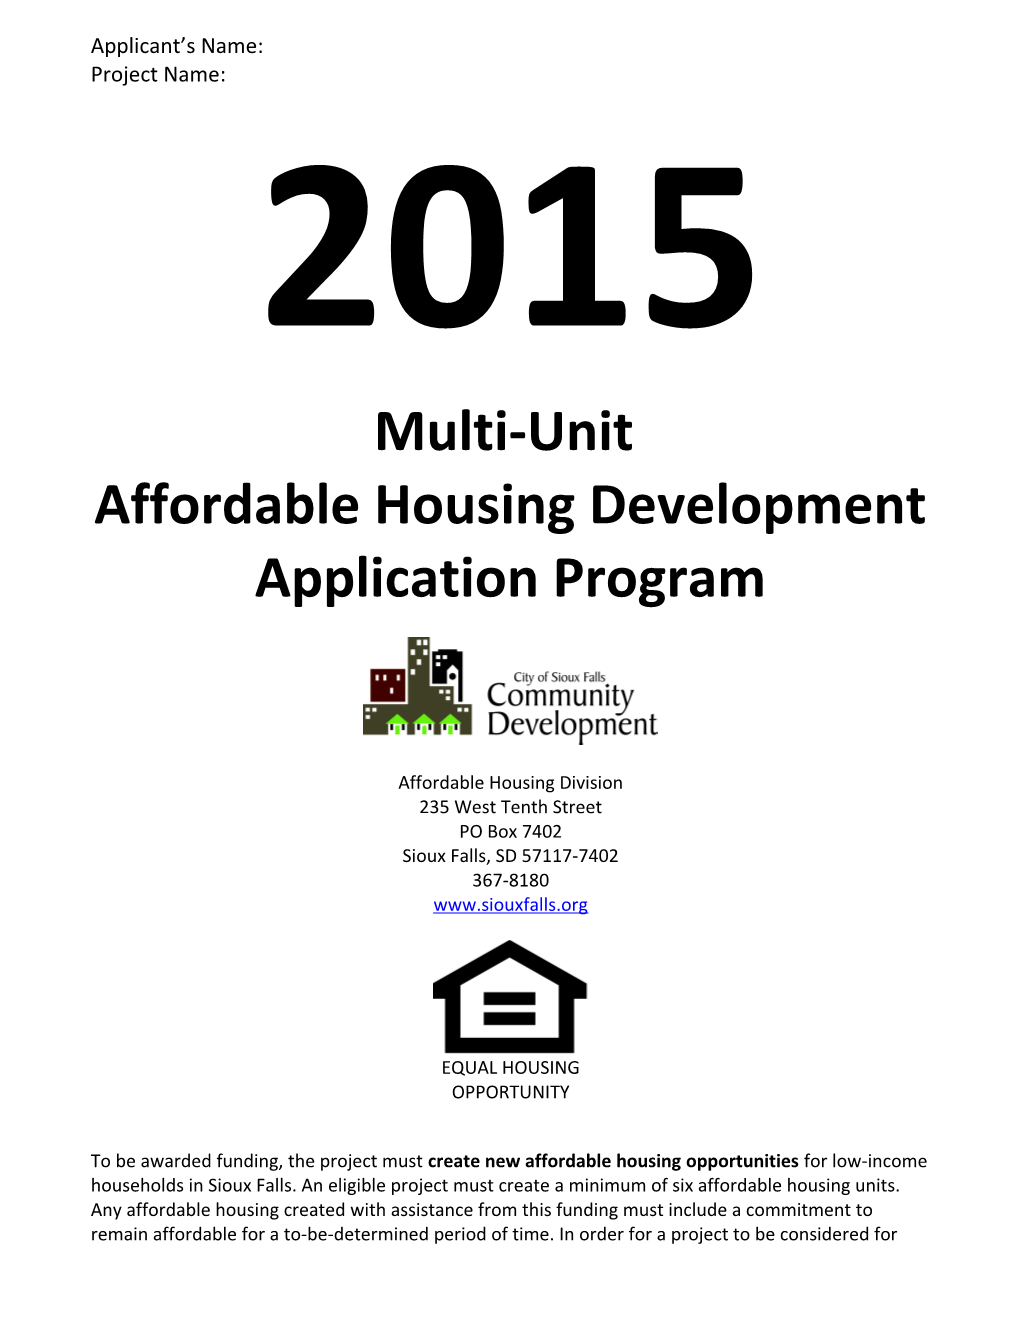 Multi-Unit Affordable Housing Development Application